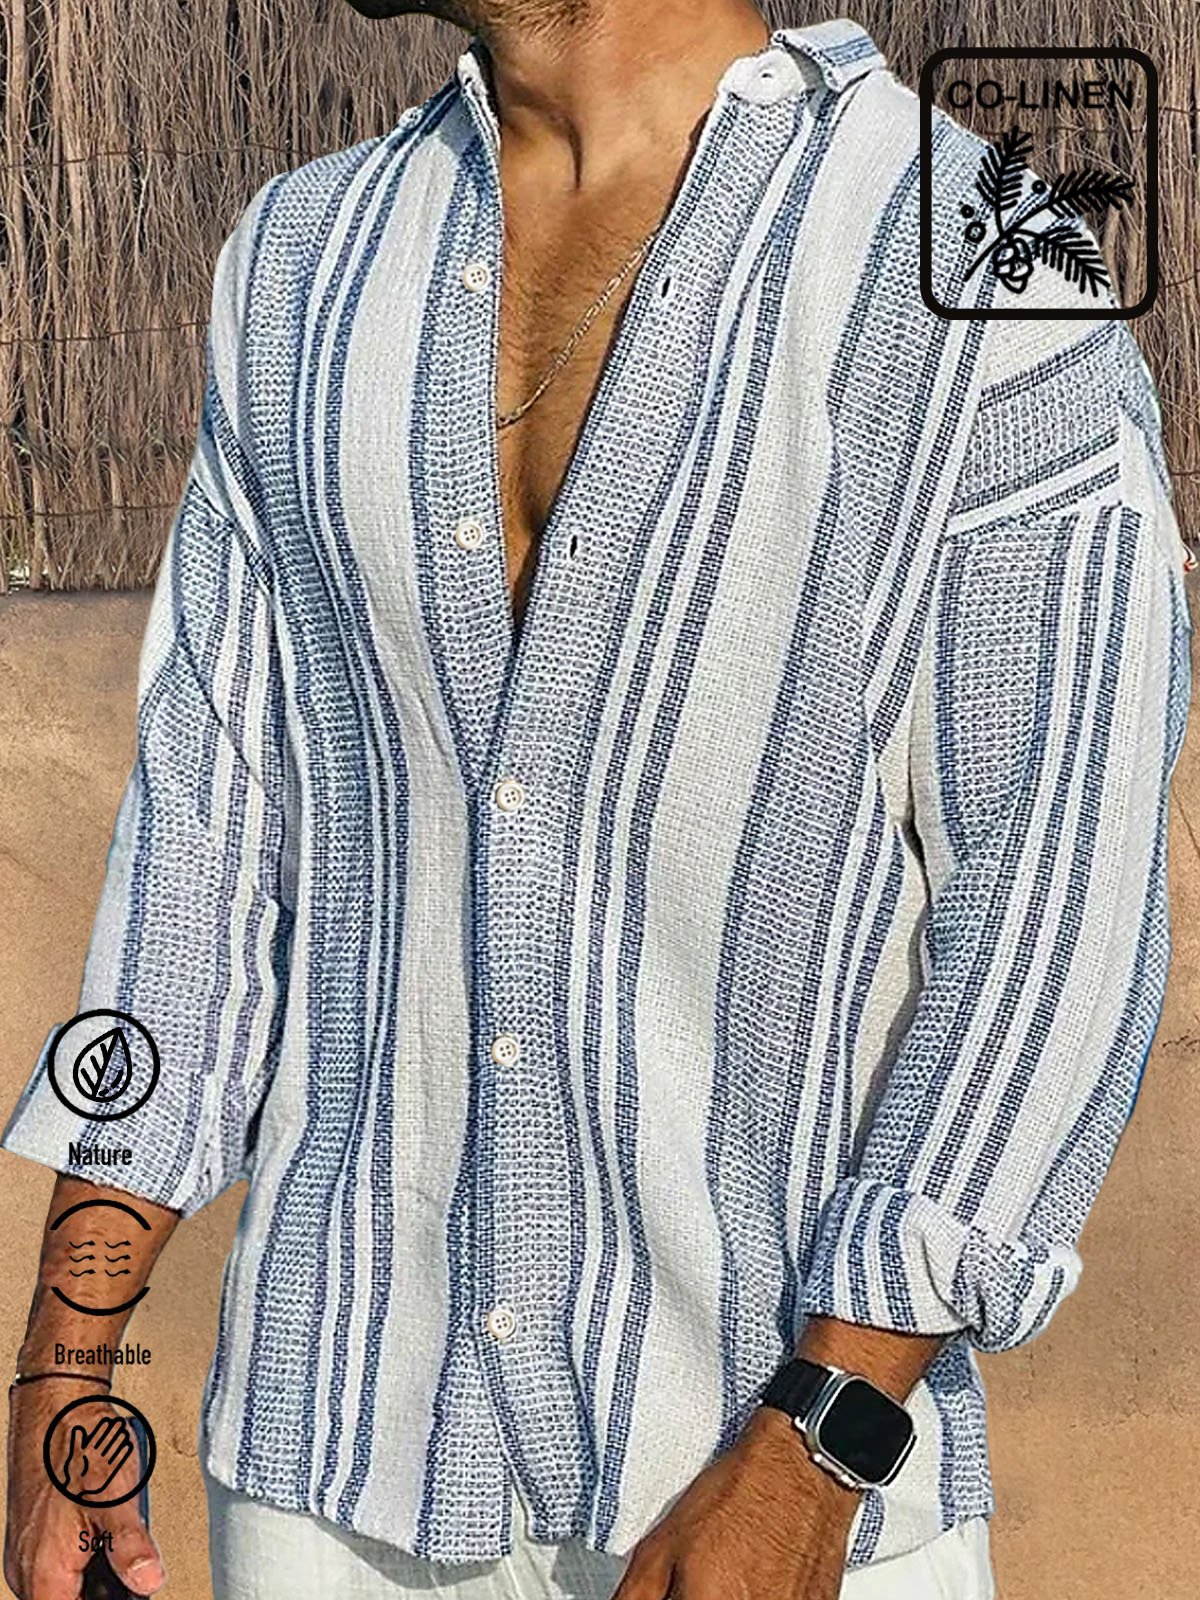 JoyMitty Casual Striped Print Men's Long Sleeve Button Pocket Shirt